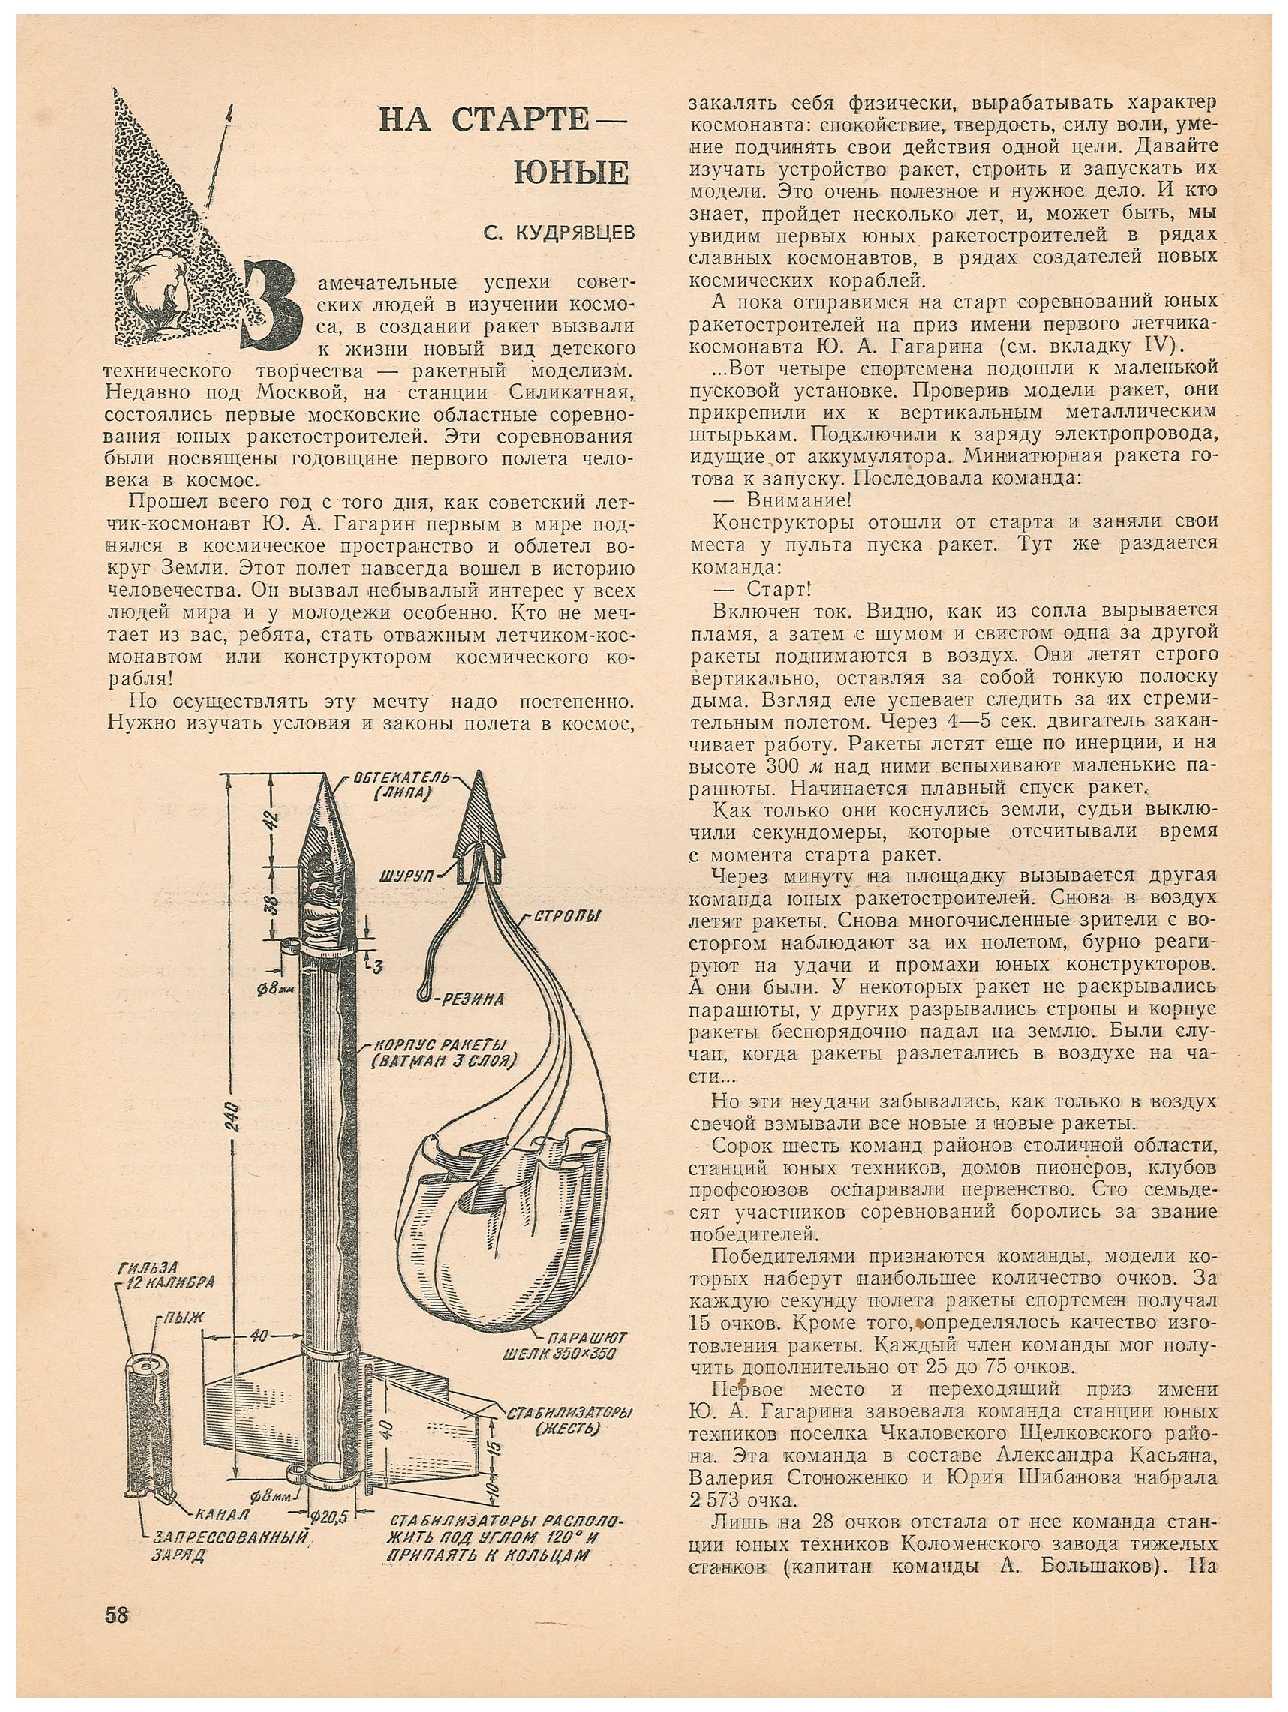 ЮМК 1, 1962, 58 c.